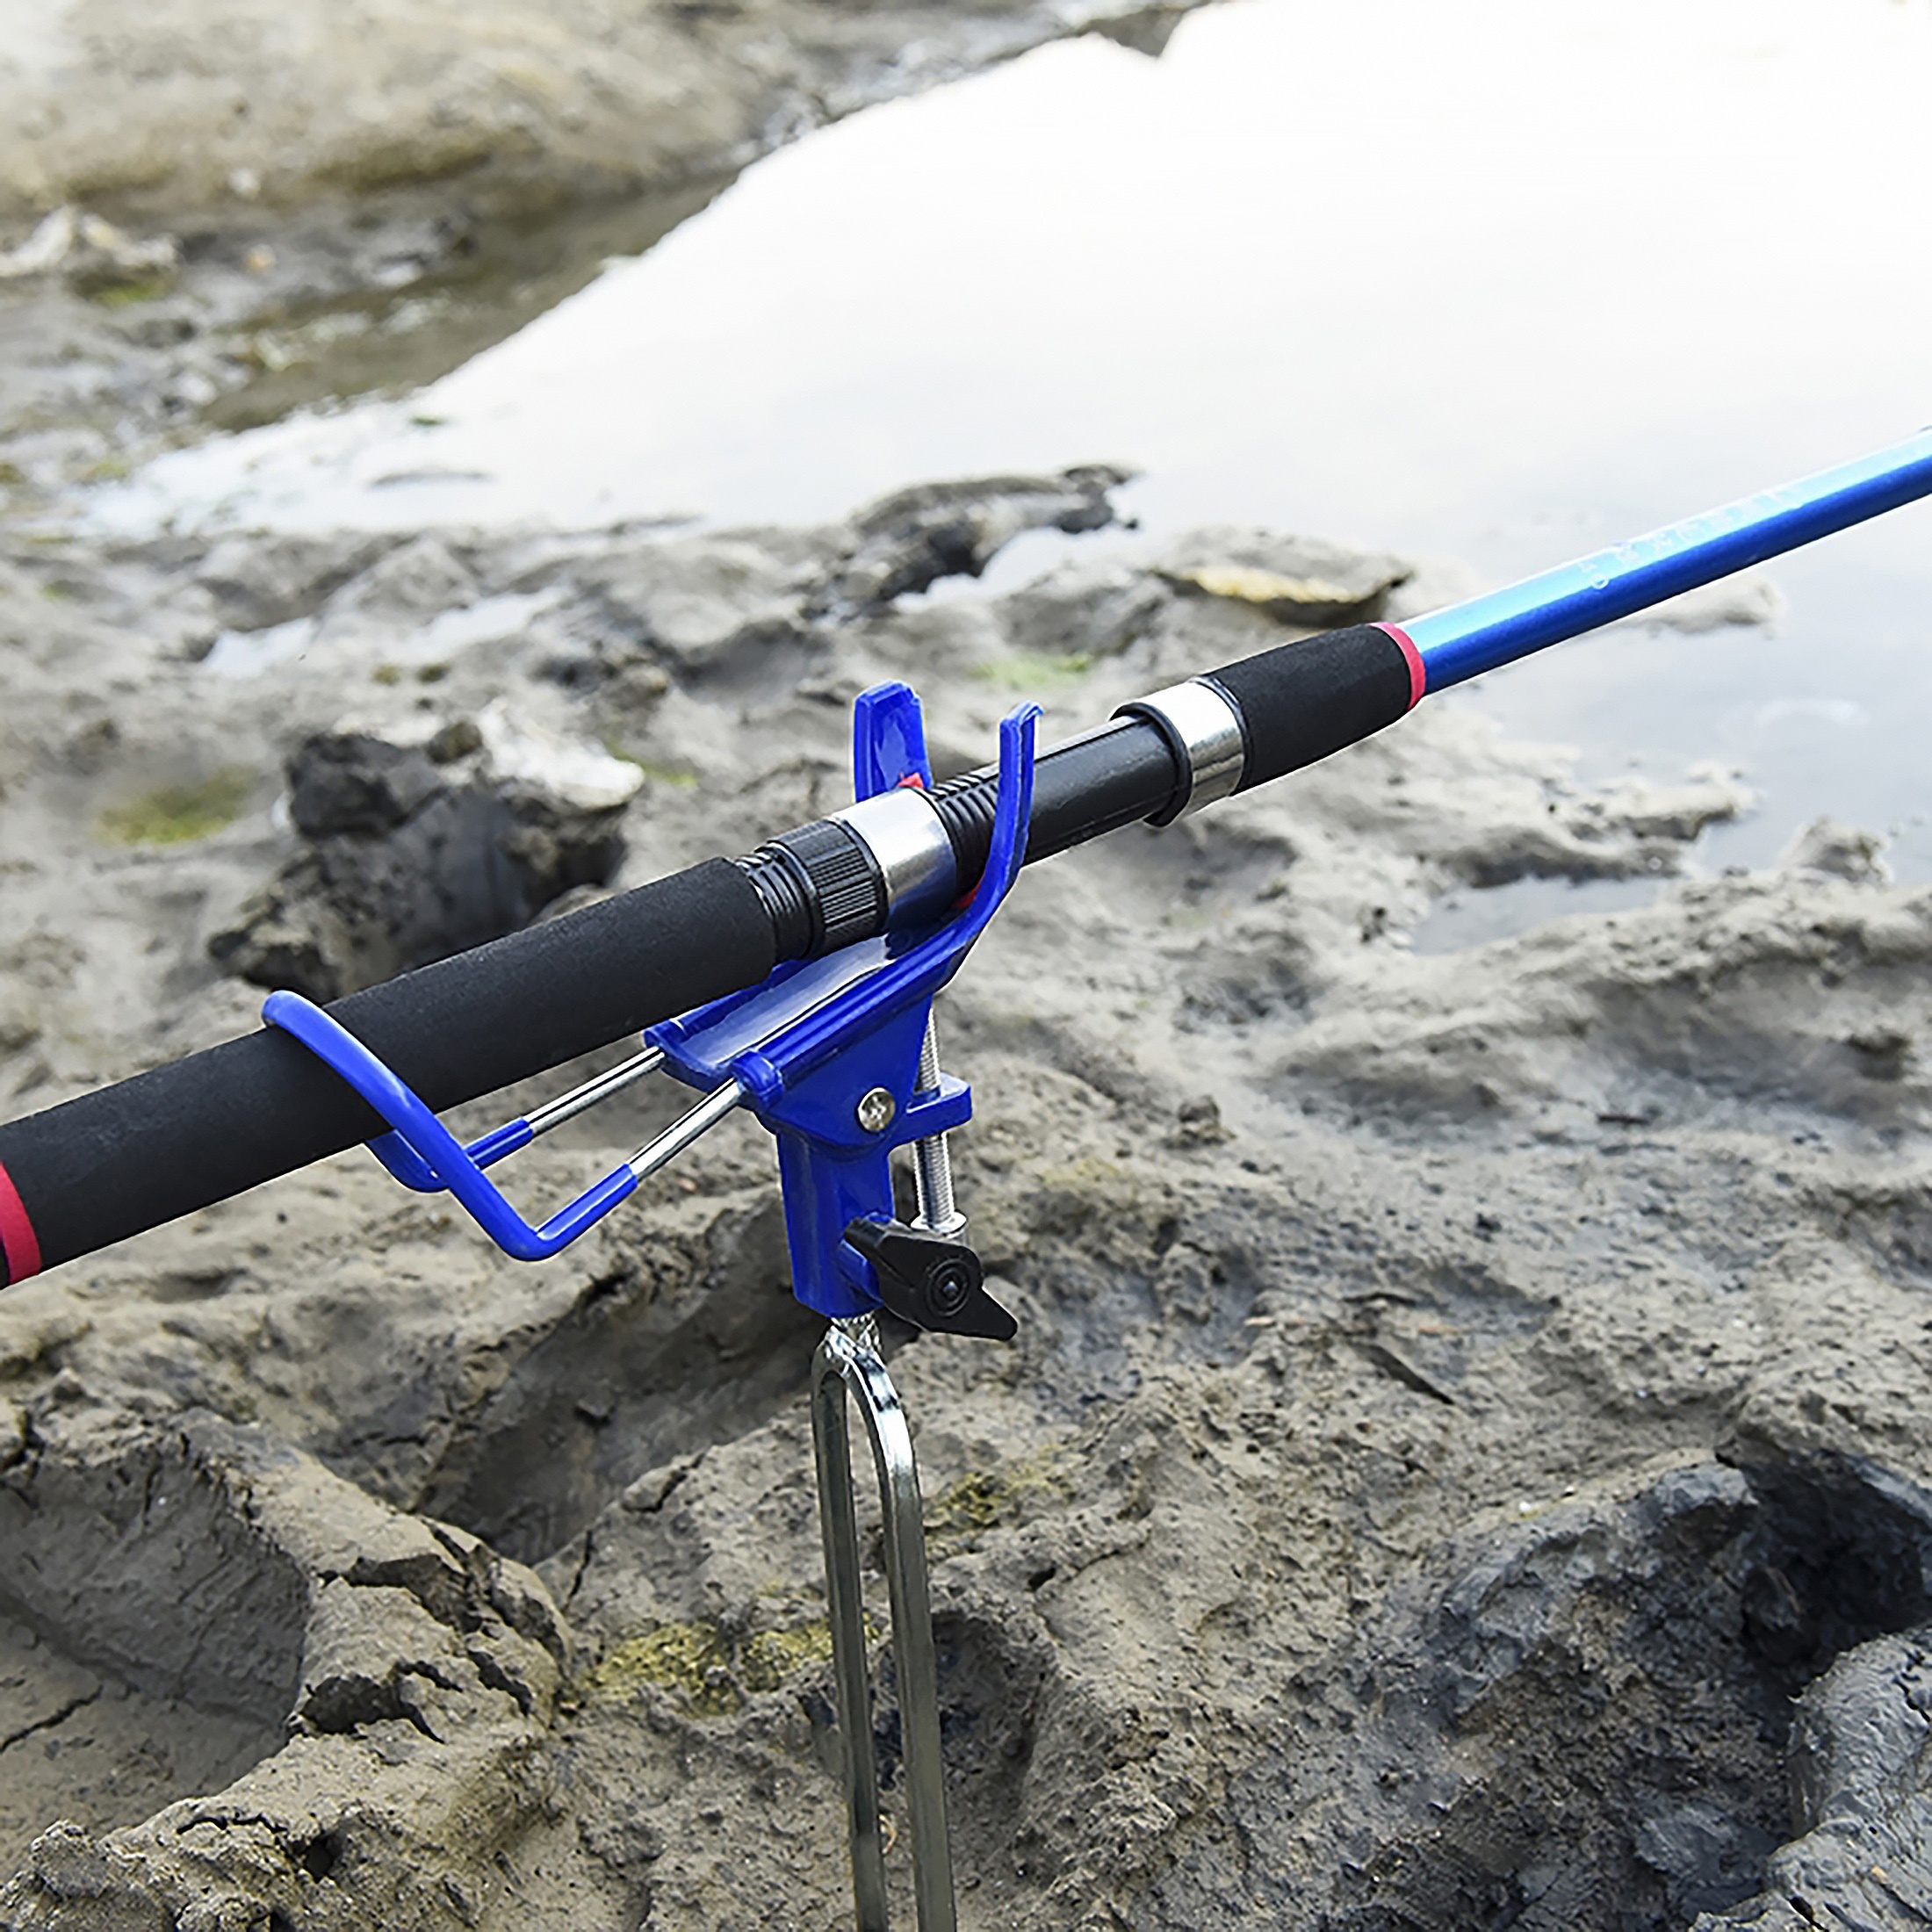  HomeSoGood 360-Degree Rotating Adjustable Fishing Rod